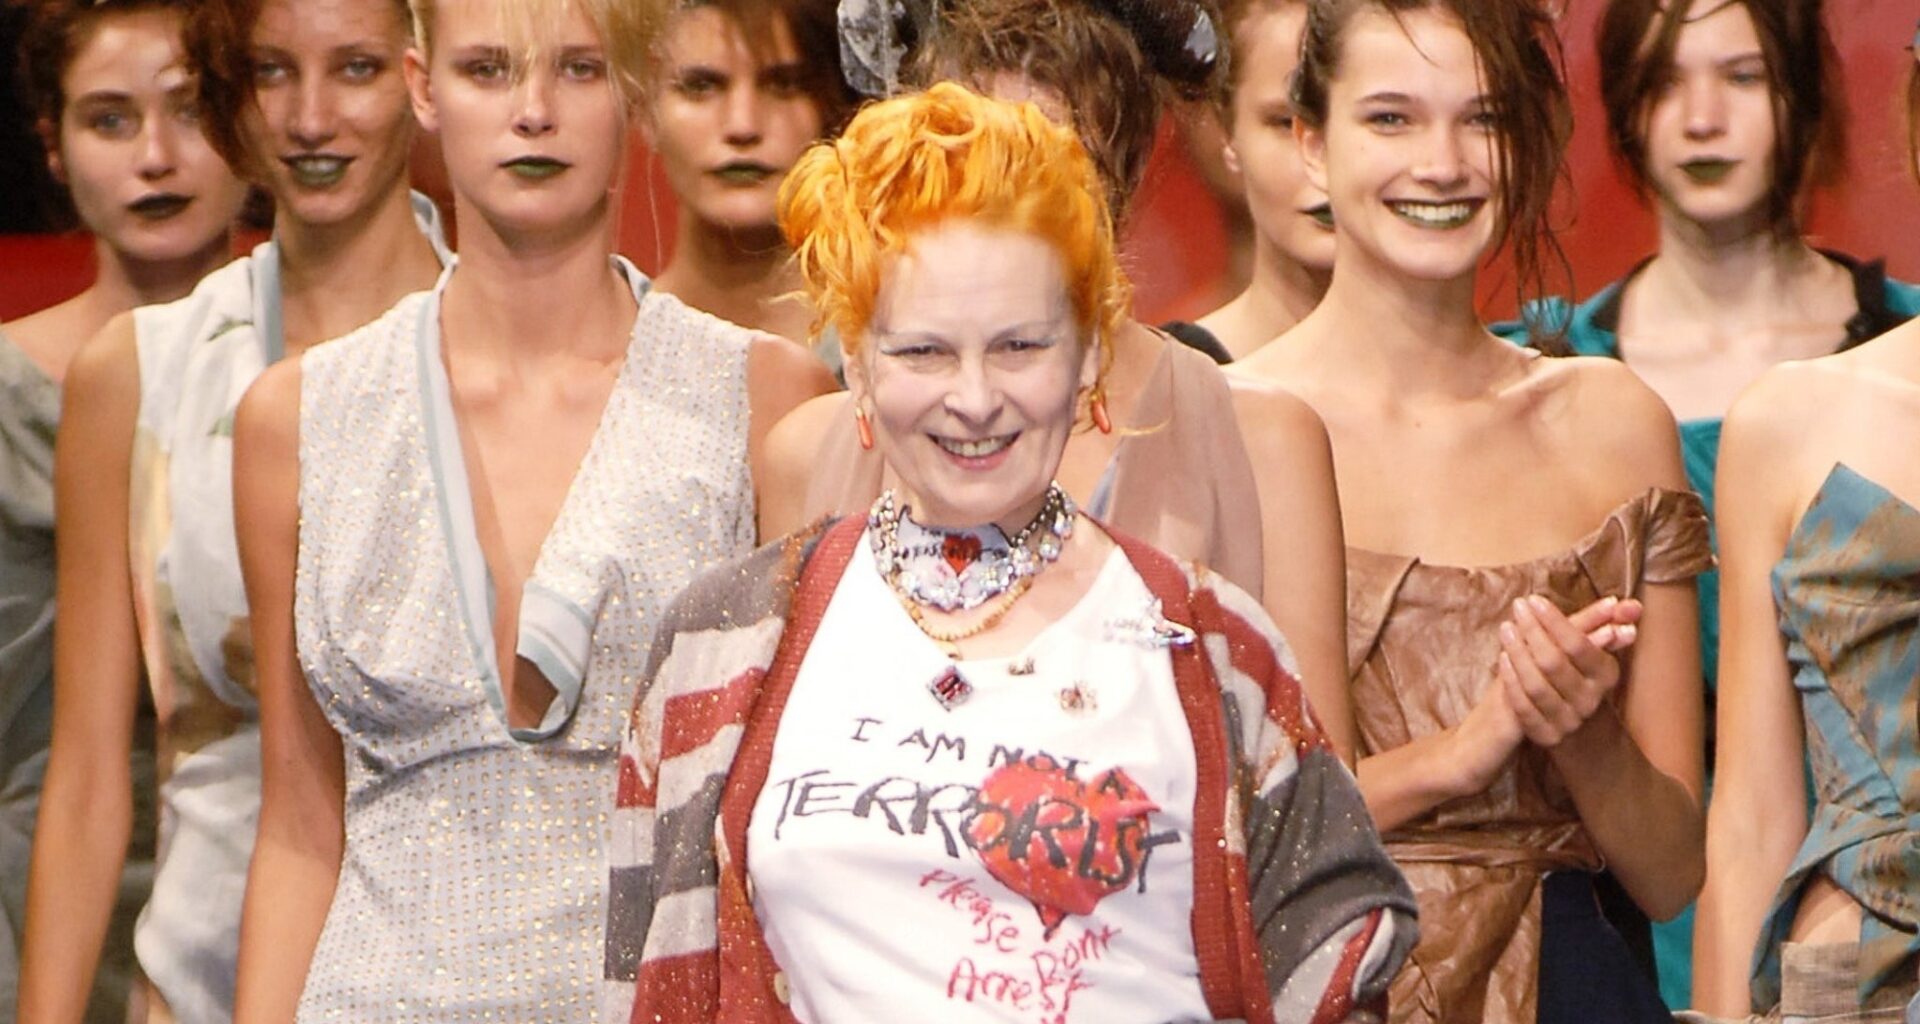 1970s Punks Fashion History Vivienne Westwood, Body Piercing